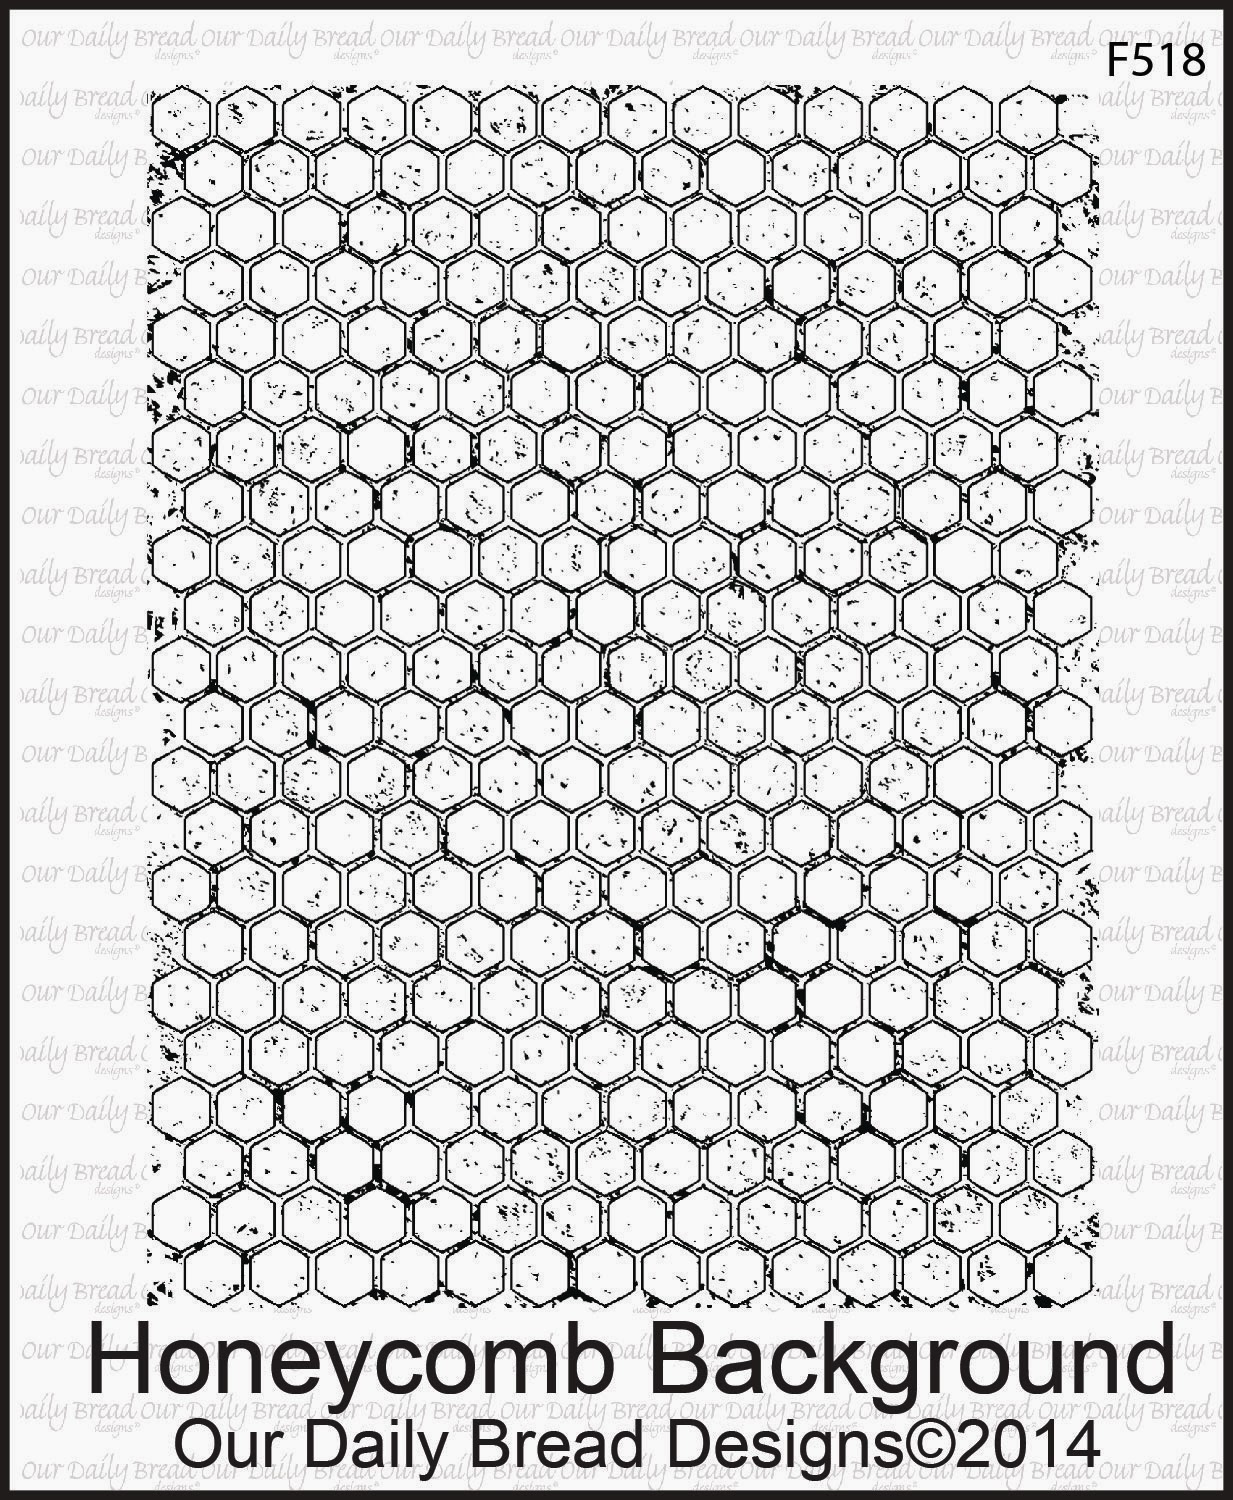 ODBD Honeycomb Background